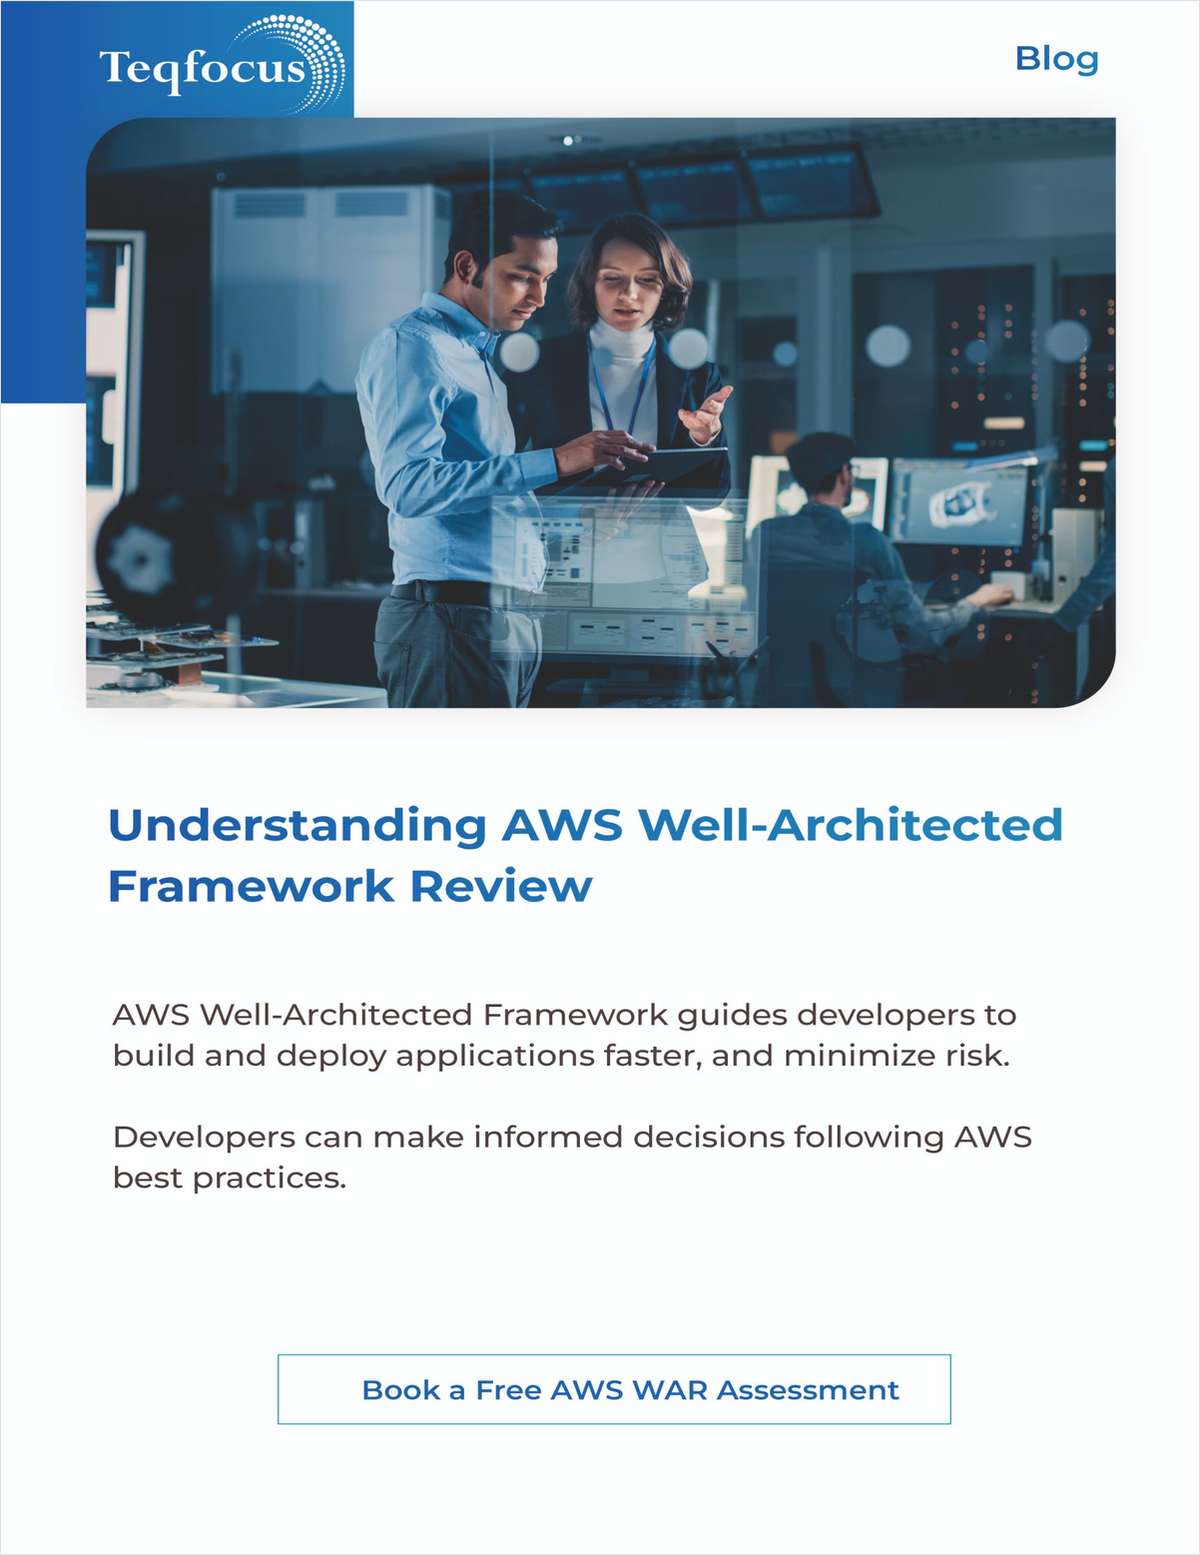 [Blog] - Understanding AWS Well-Architected Framework Review